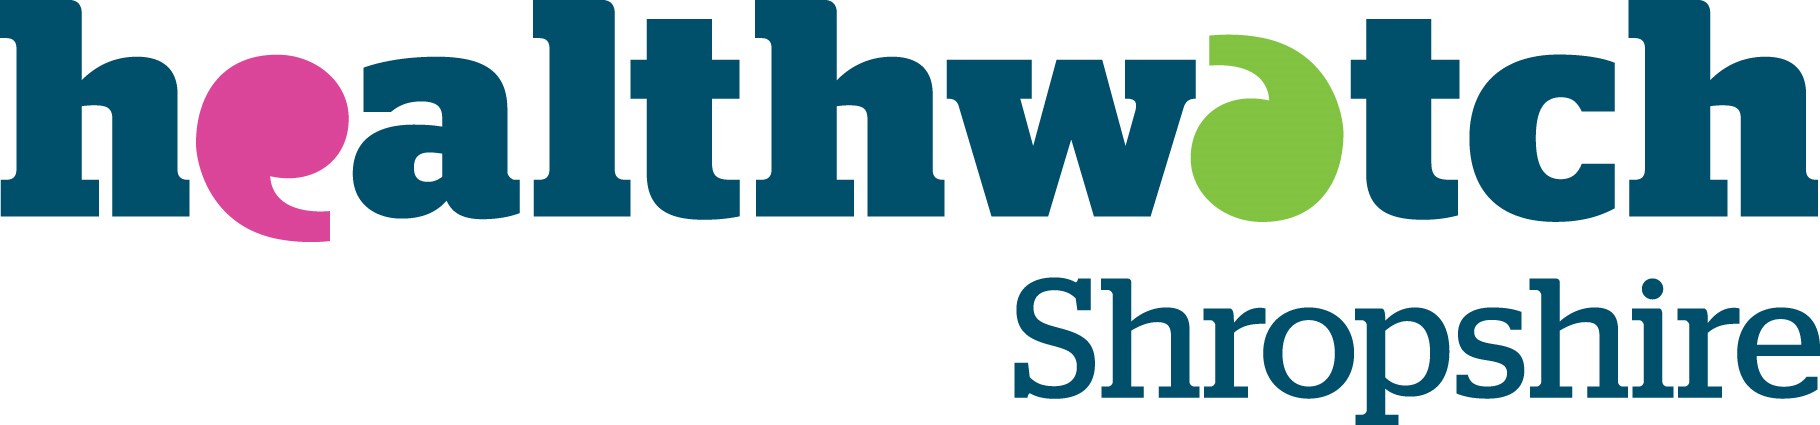 Healthwatch Shropshire logo